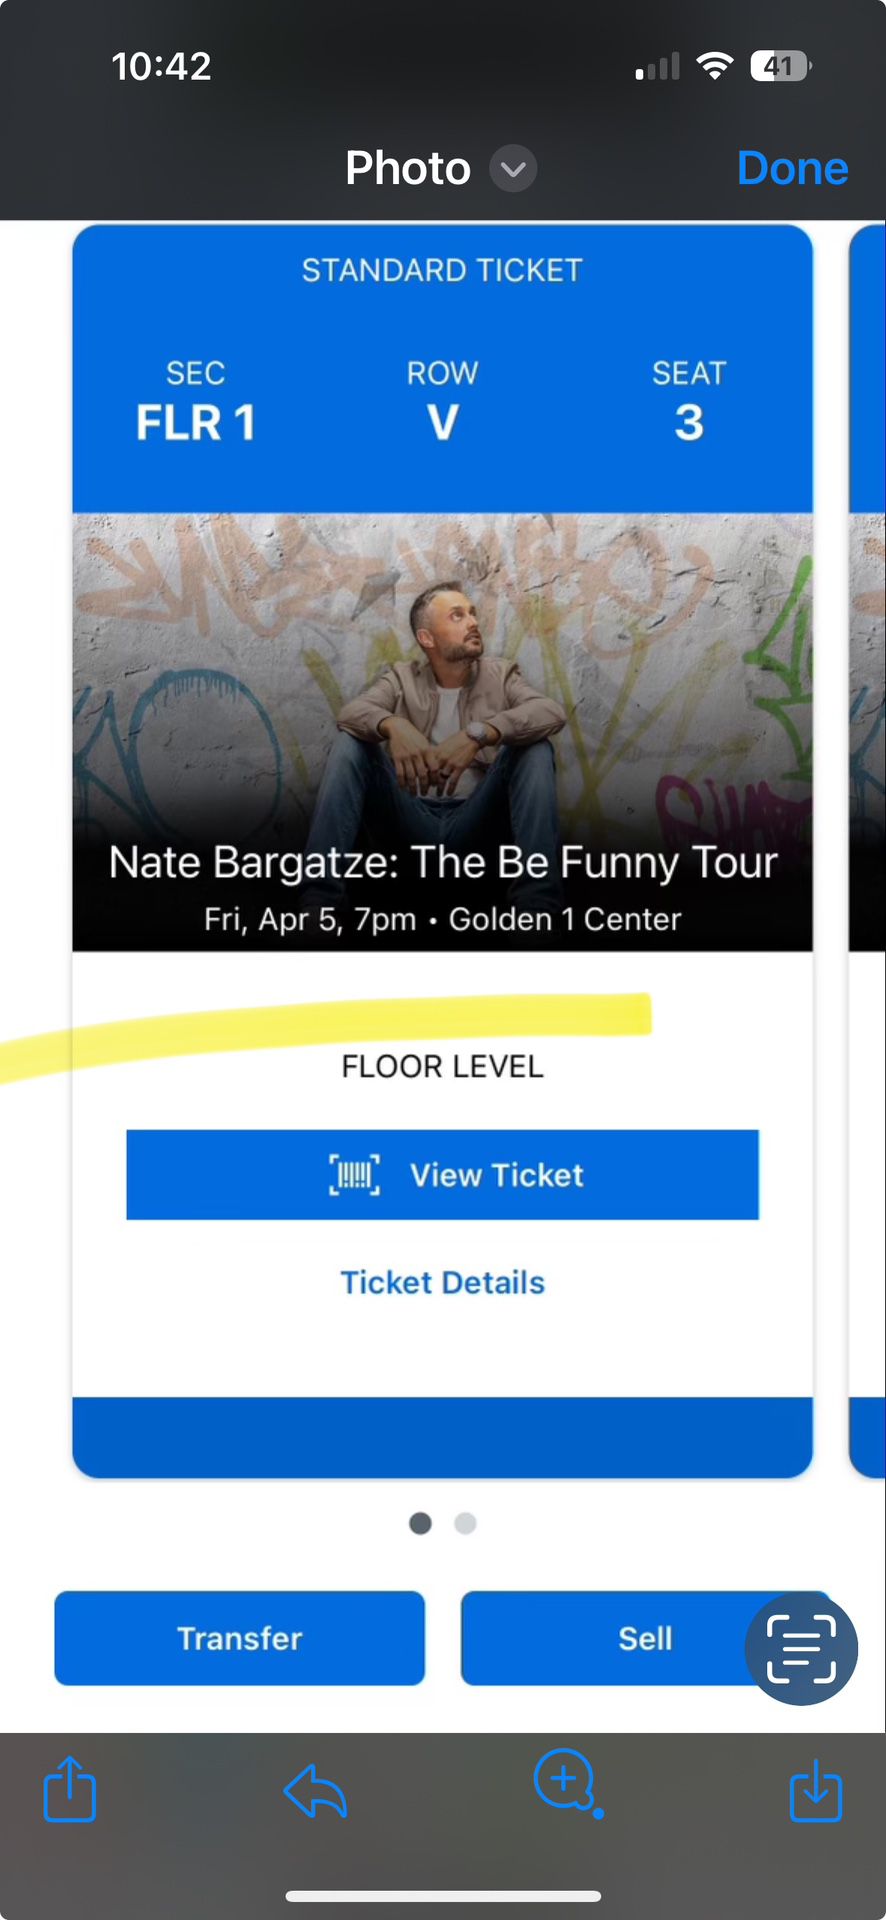 Nate Bargatze Tickets